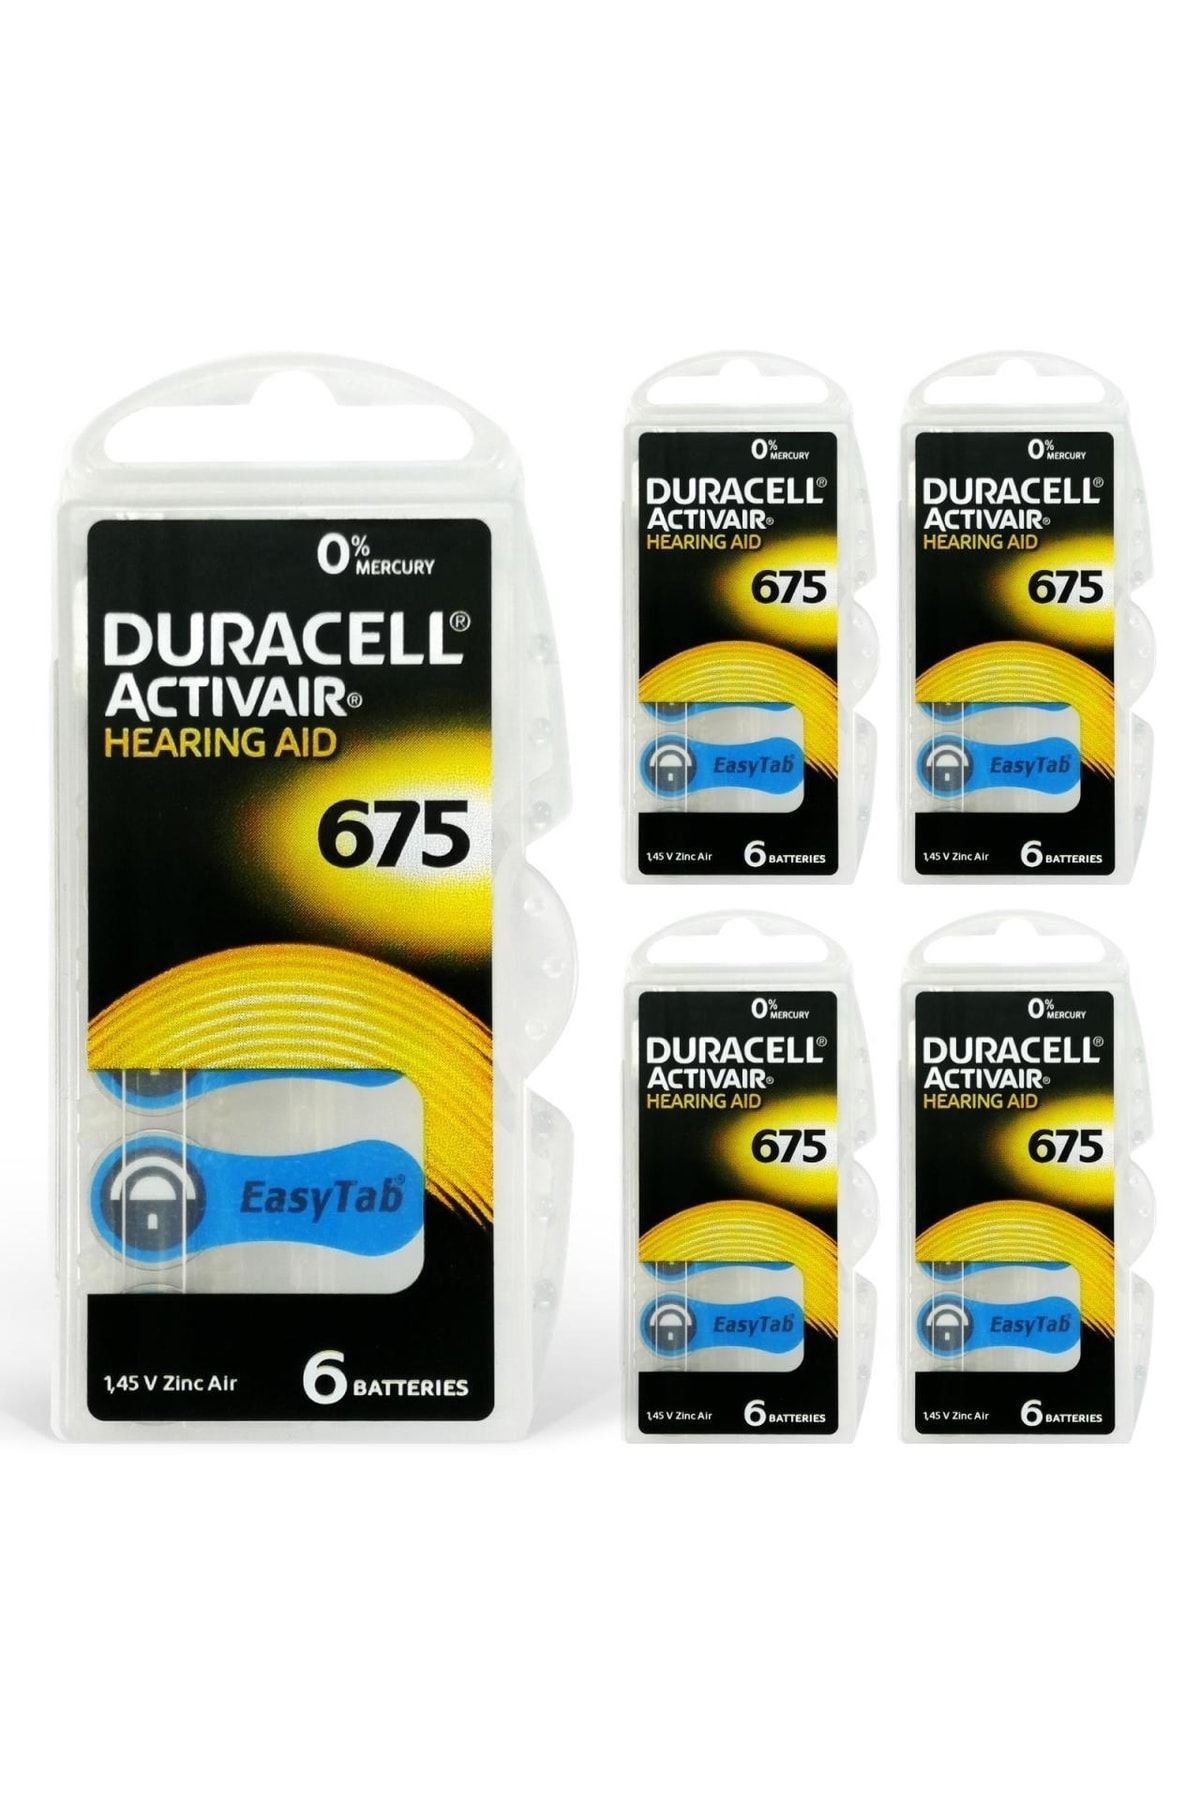 Duracell Activair 675 Numara Işitme Cihazı Uyumlu Pili (5 Paket X 6 Adet= 30 Adet Pil)